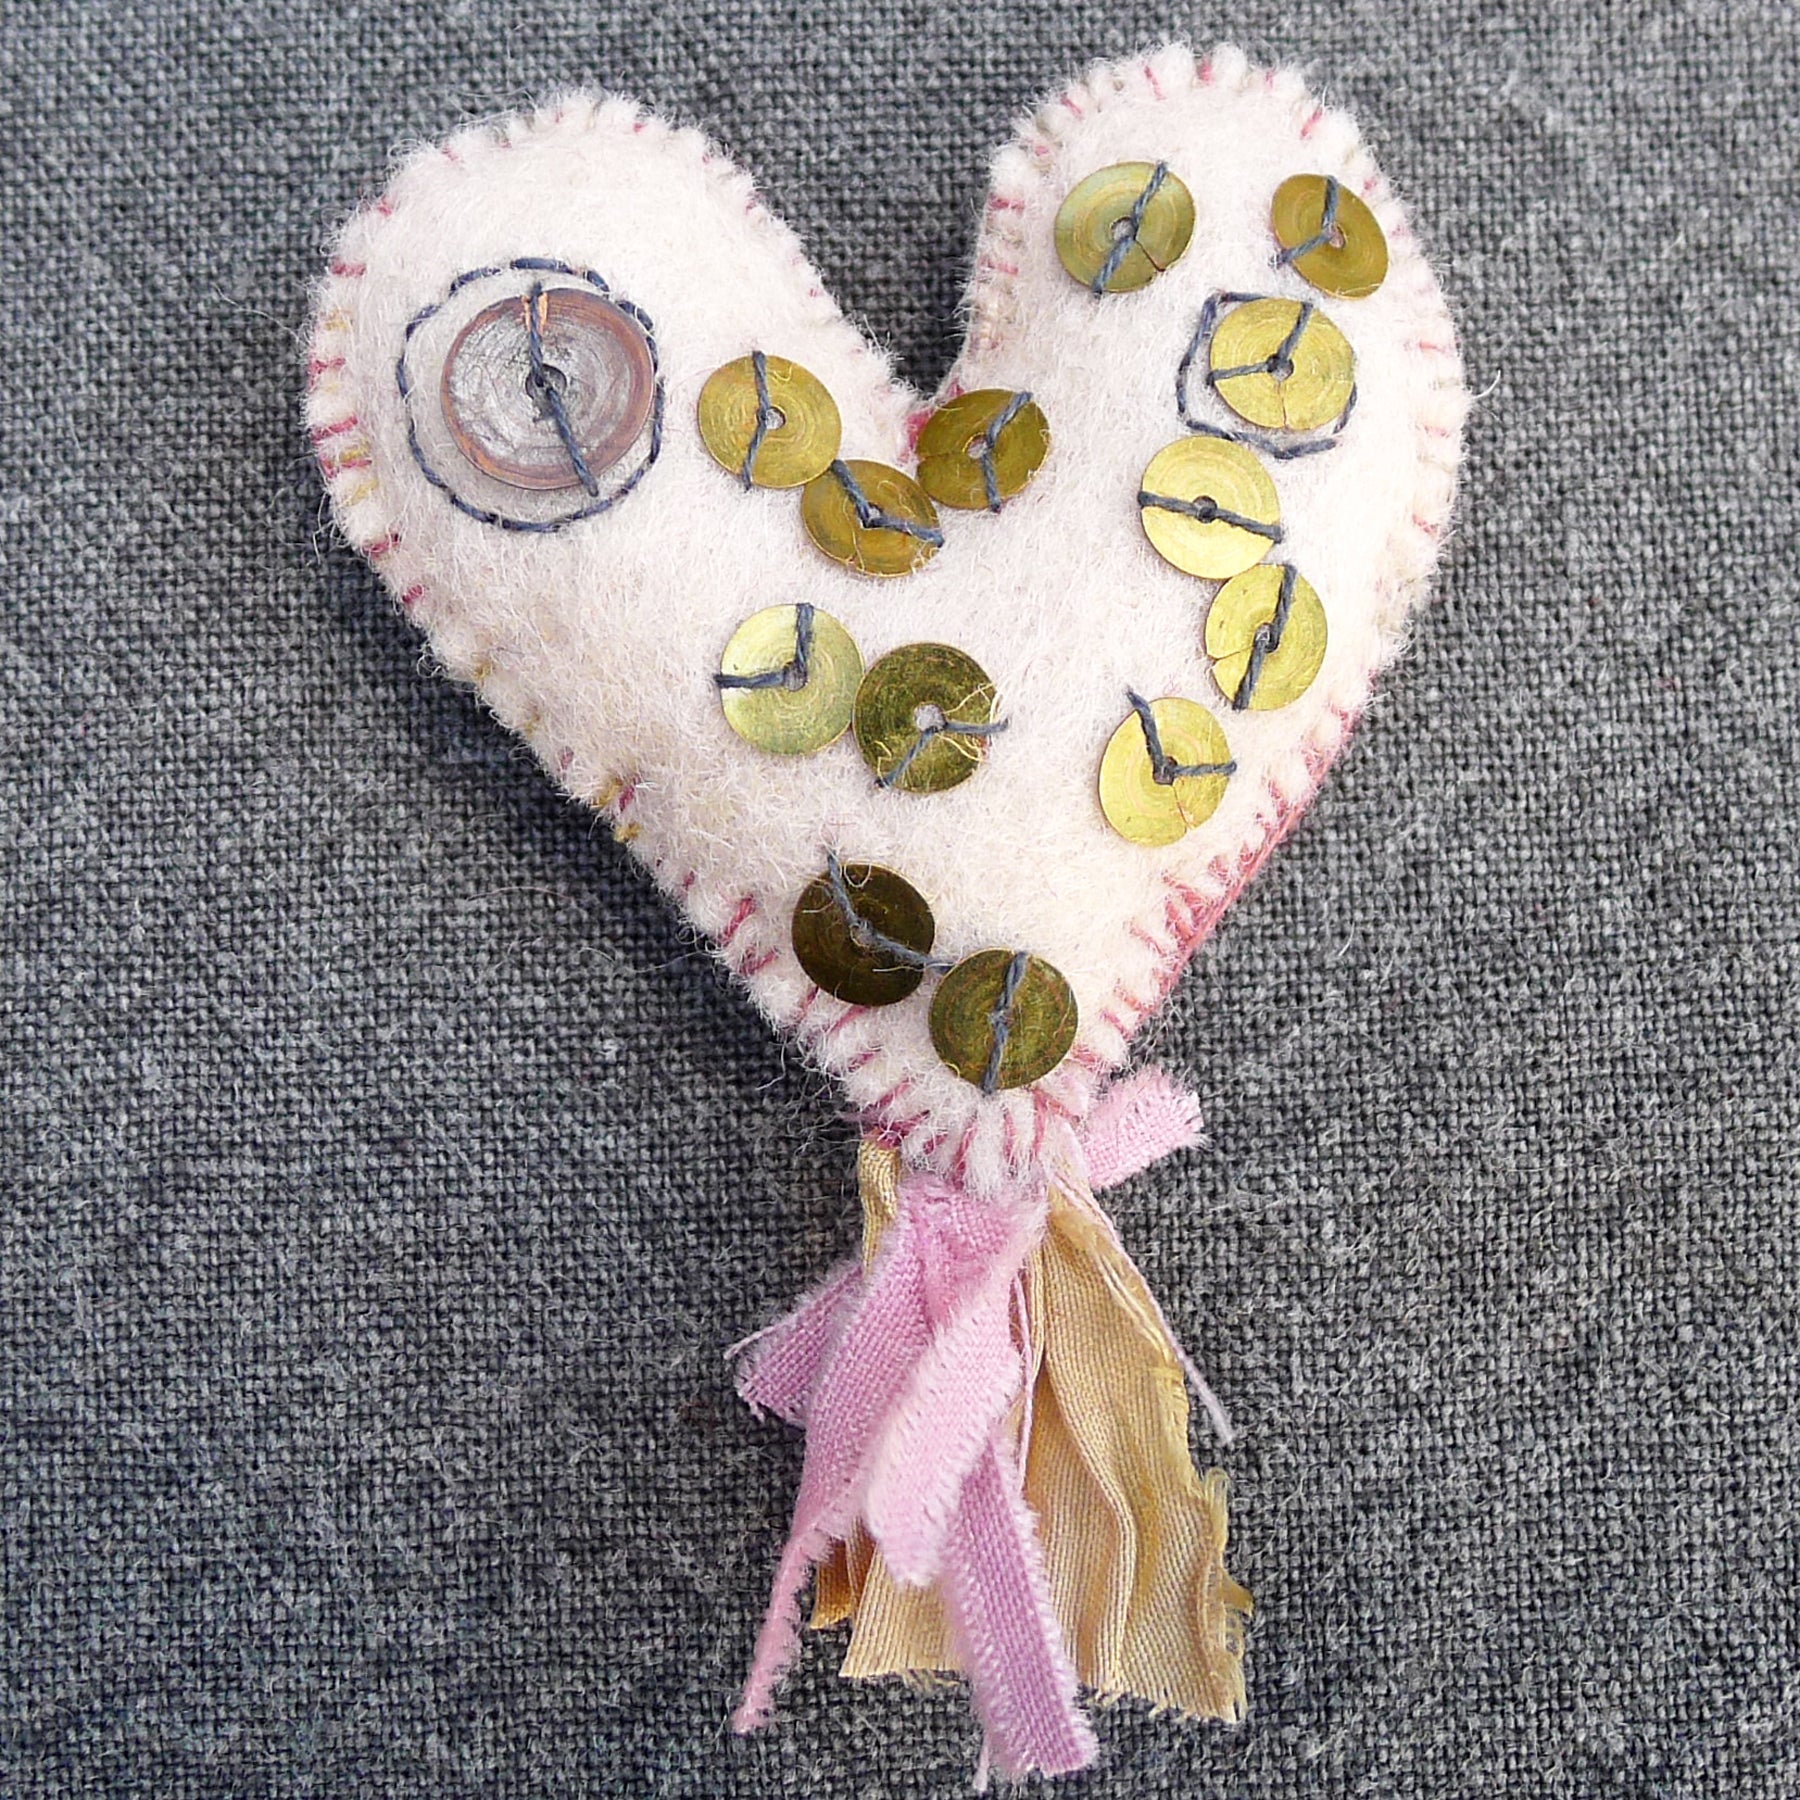 heavily stitched wool felt hearts – kata golda handmade